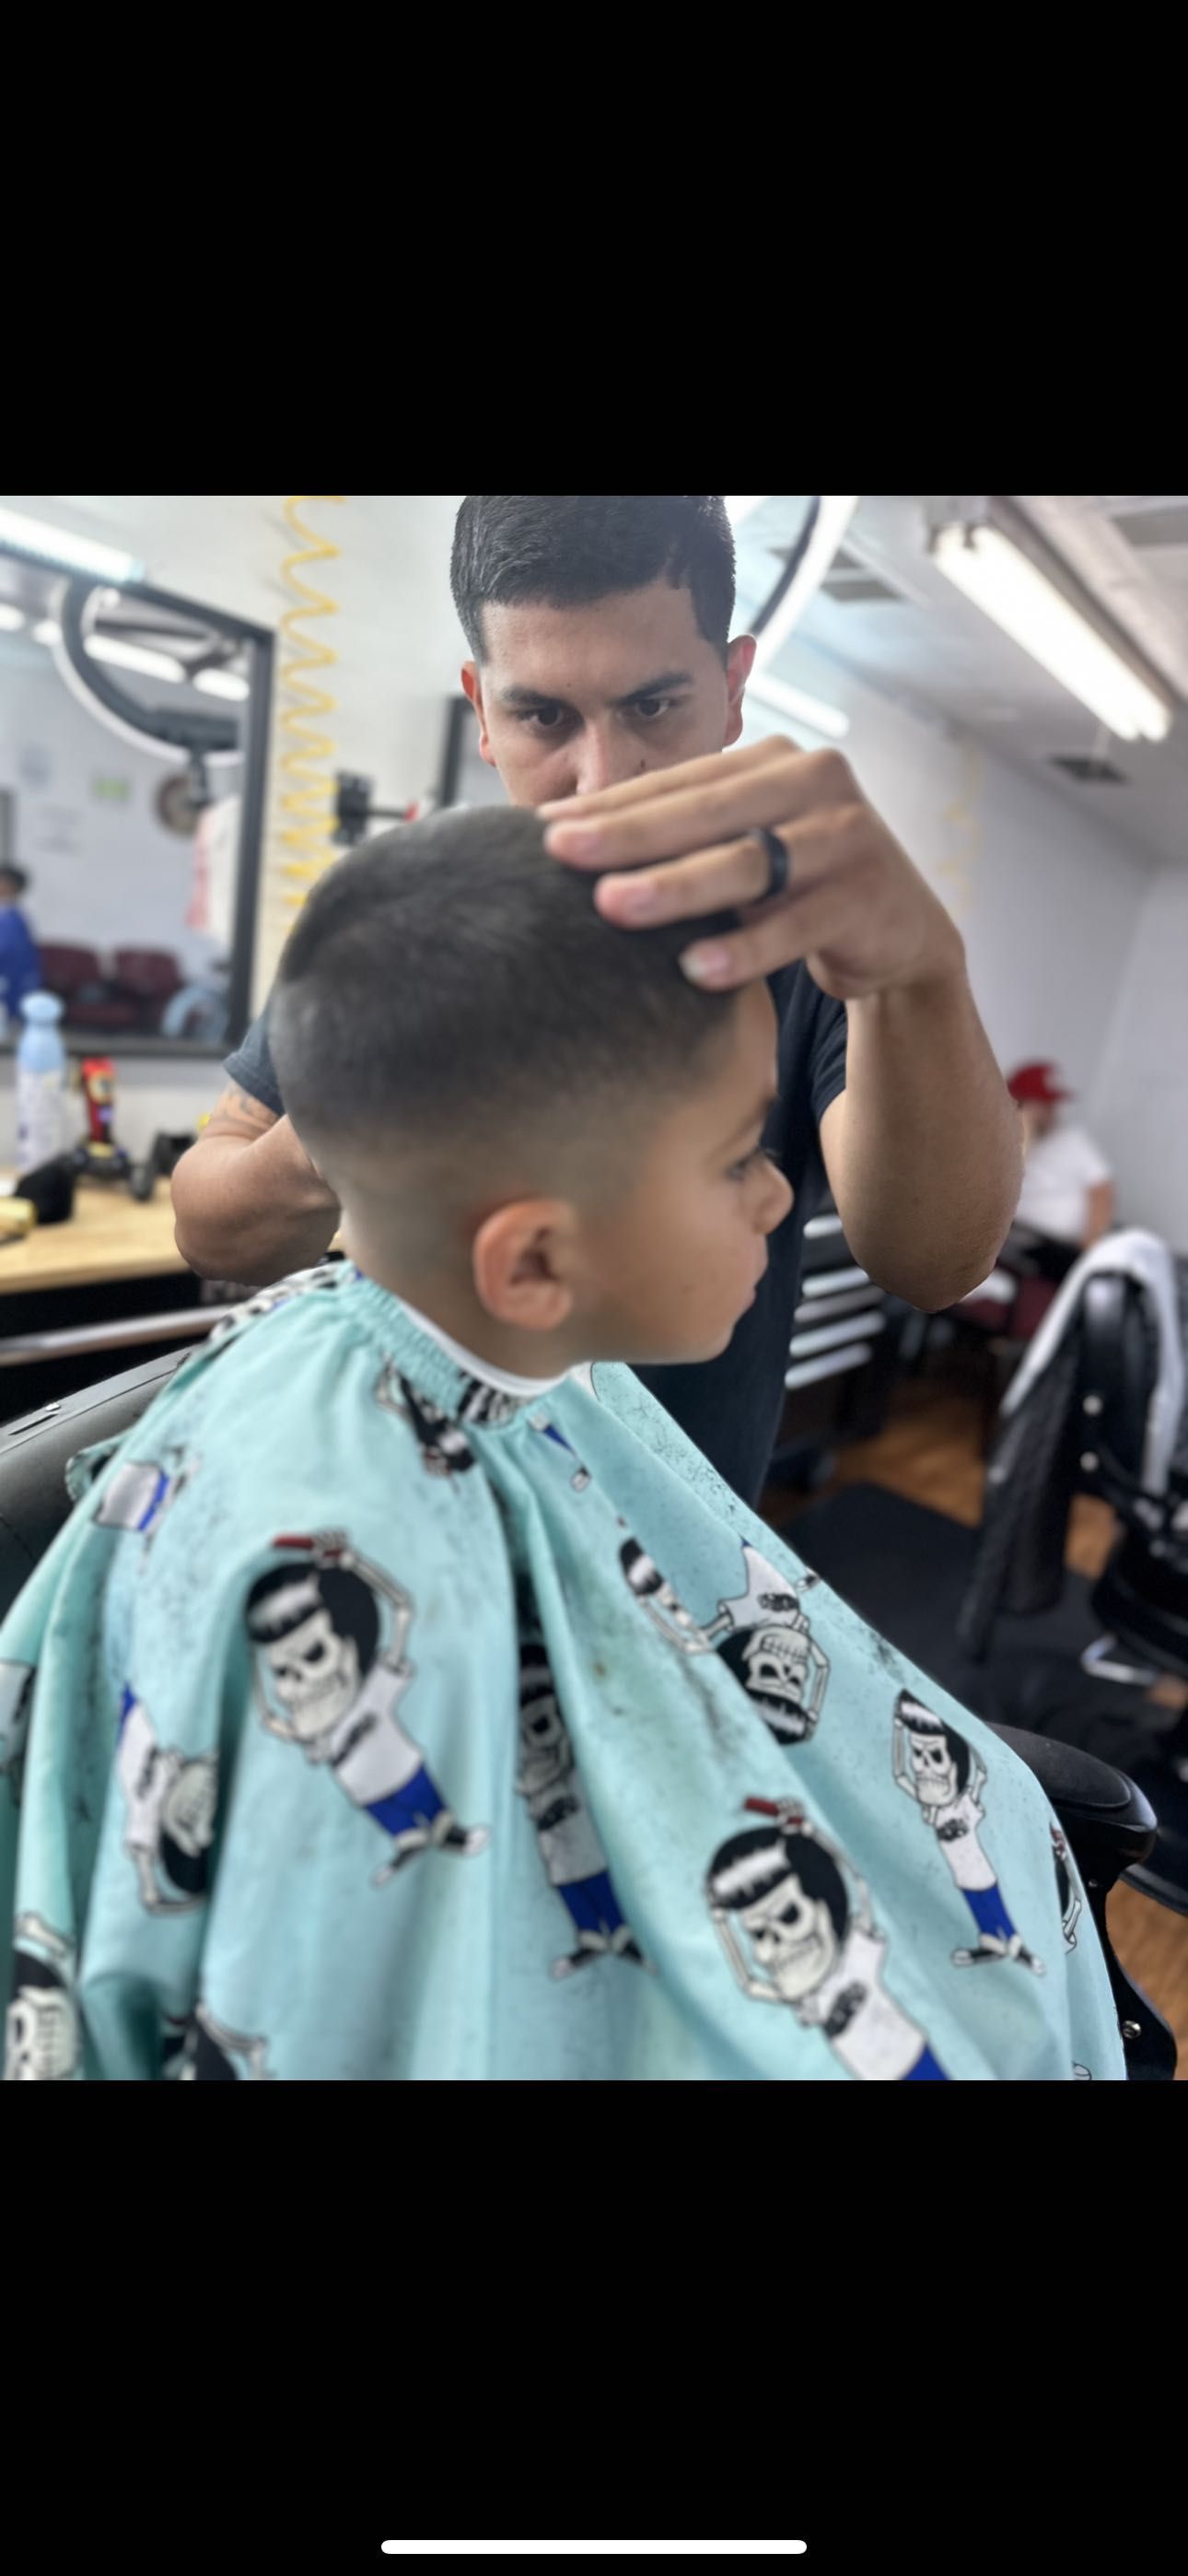 Jose - Pollo’s Barbershop 2